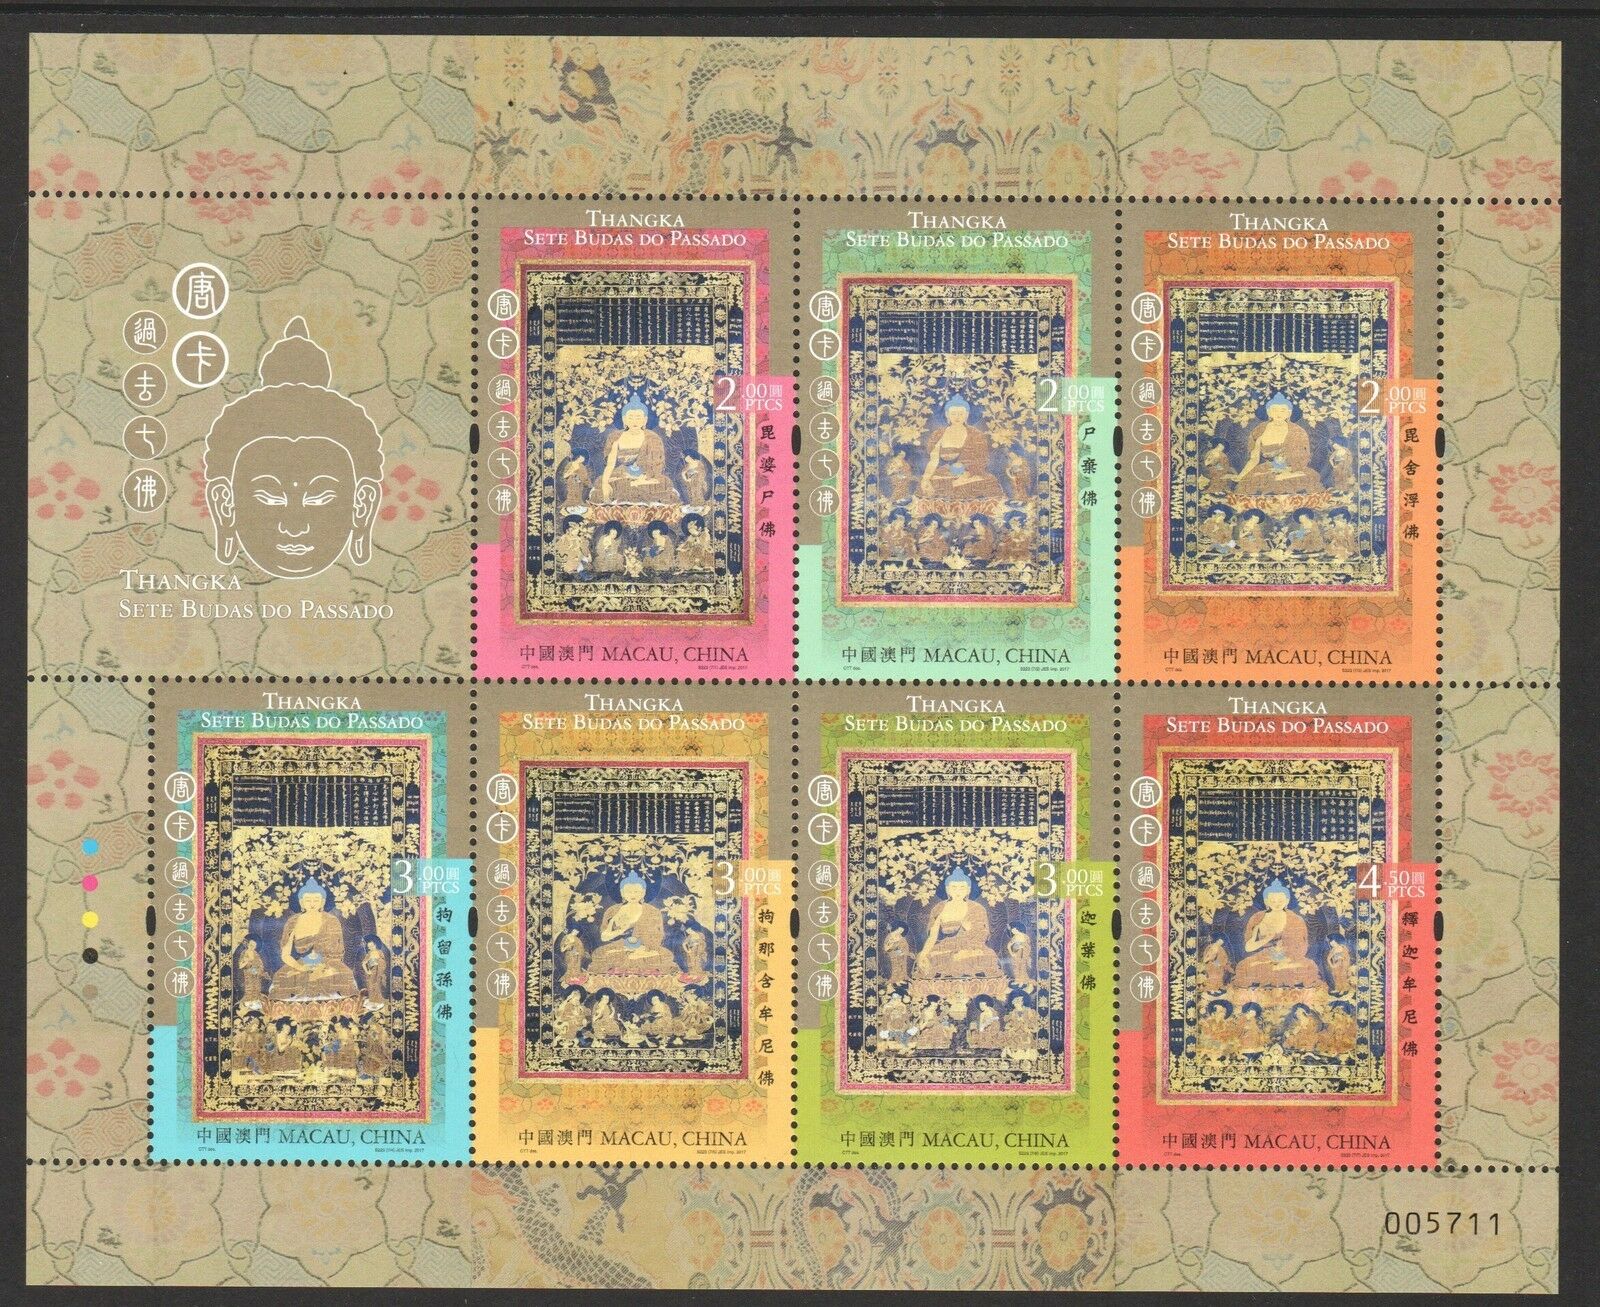 Macau China 2017 Thangka Seven Buddhas Of The Past Souvenir Sheet 7 Stamps Mint